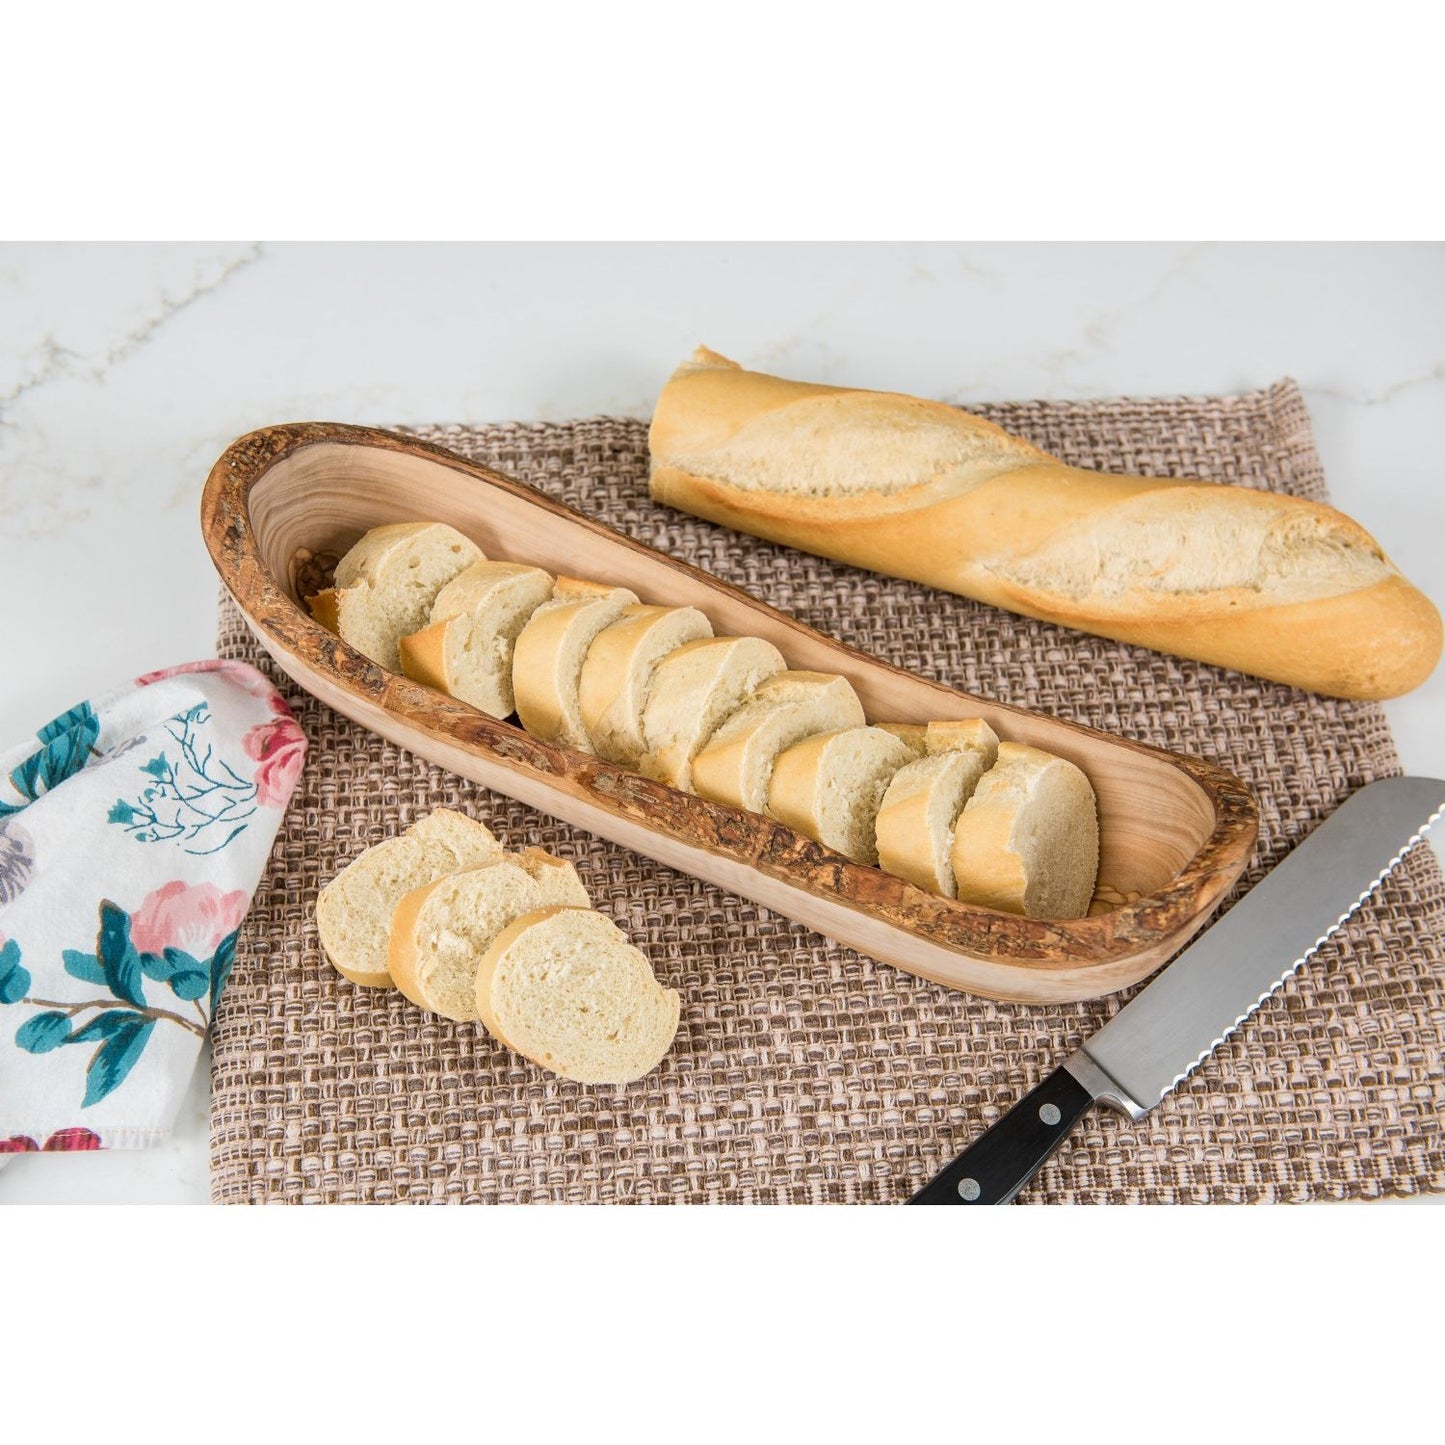 Lipper International Olive Wood Bread Basket